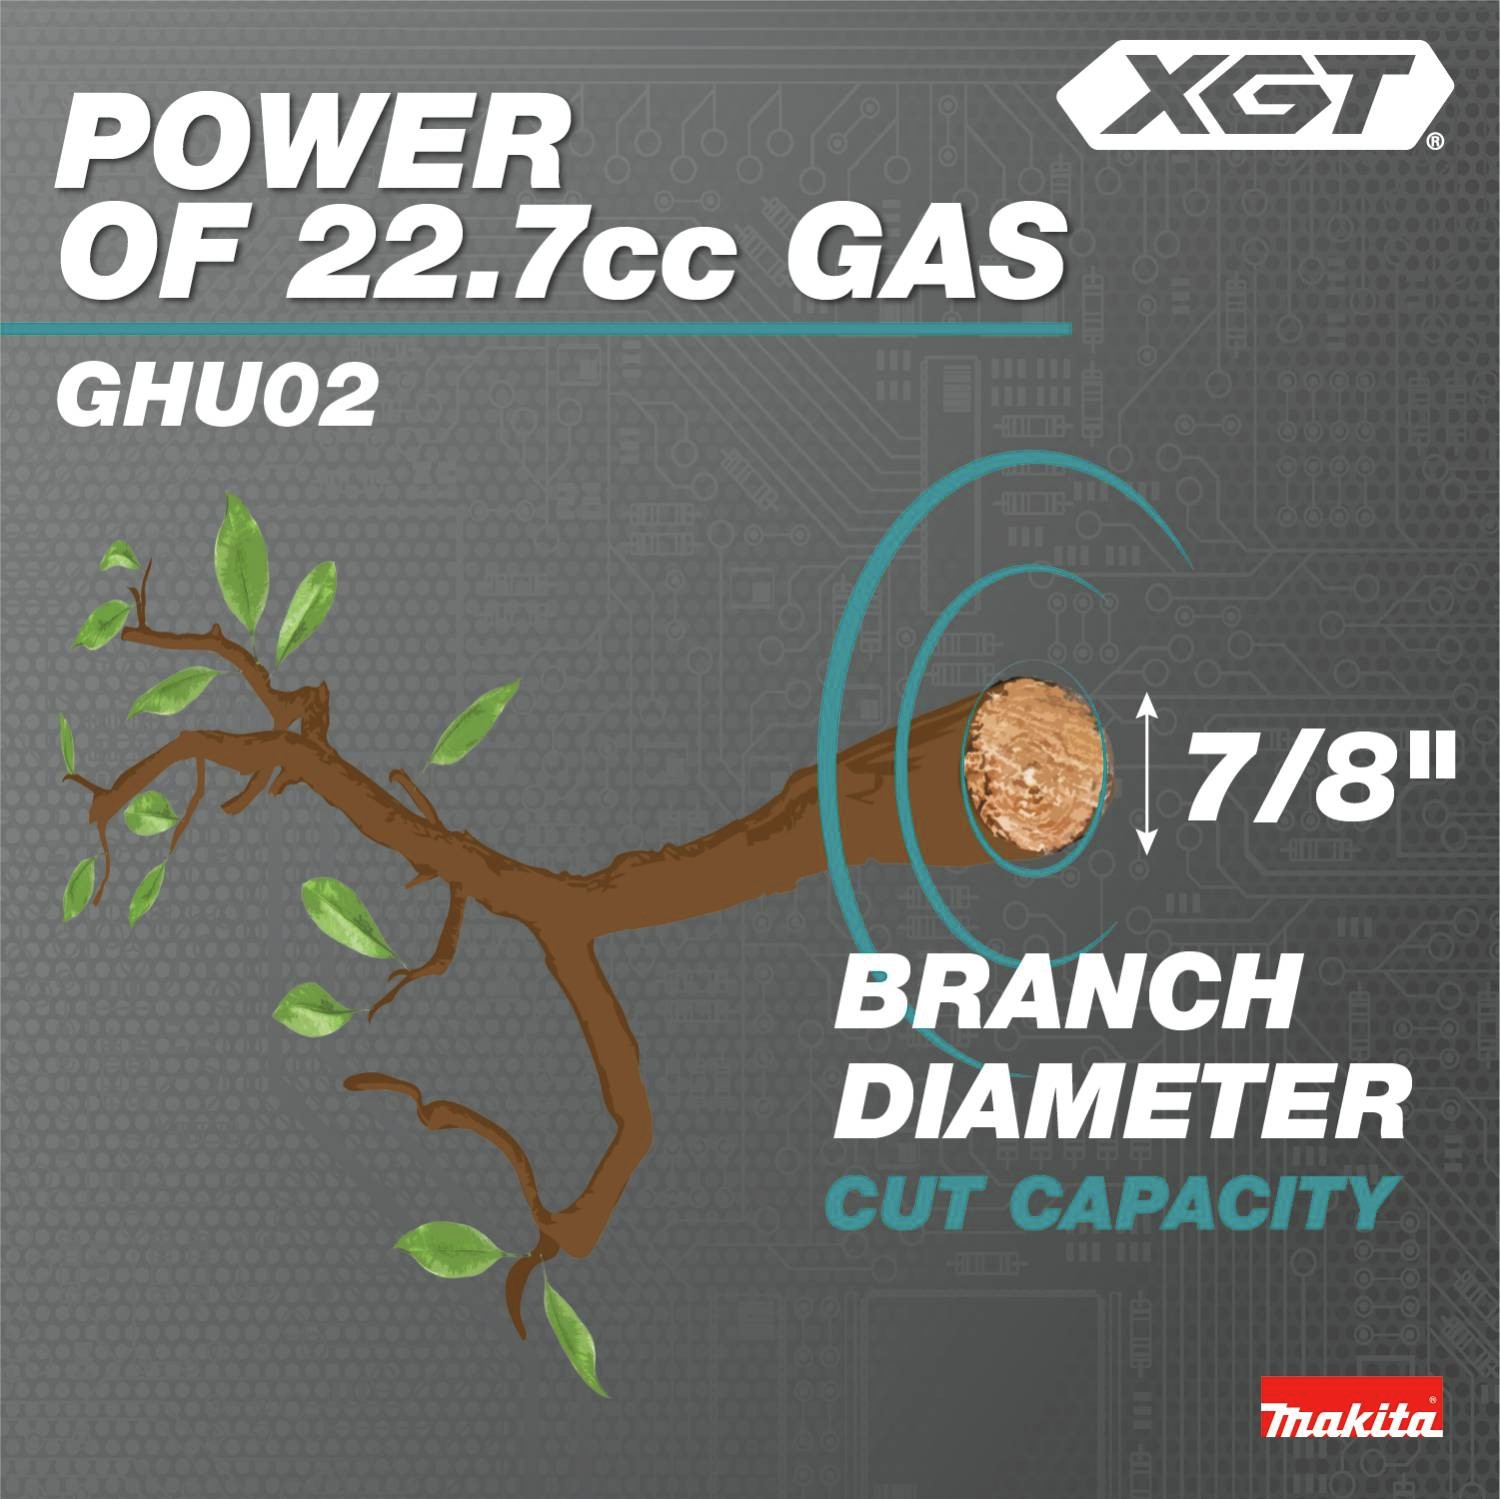 Power of 22.7cc Gas: 7/8 in. branch diameter cut capacity